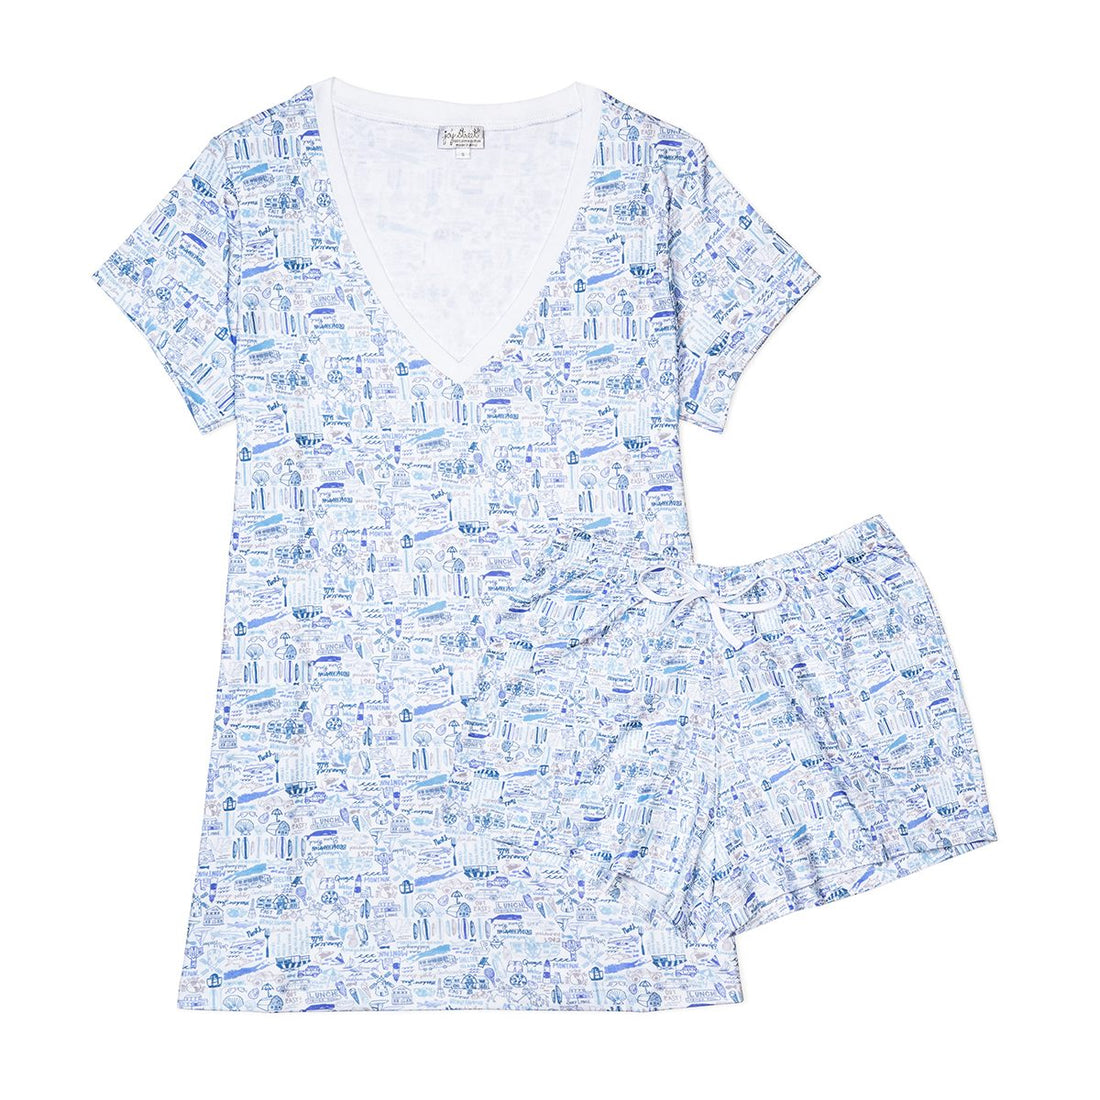 Women's Super-Soft Shrink-Free Pajamas, Short Set Print